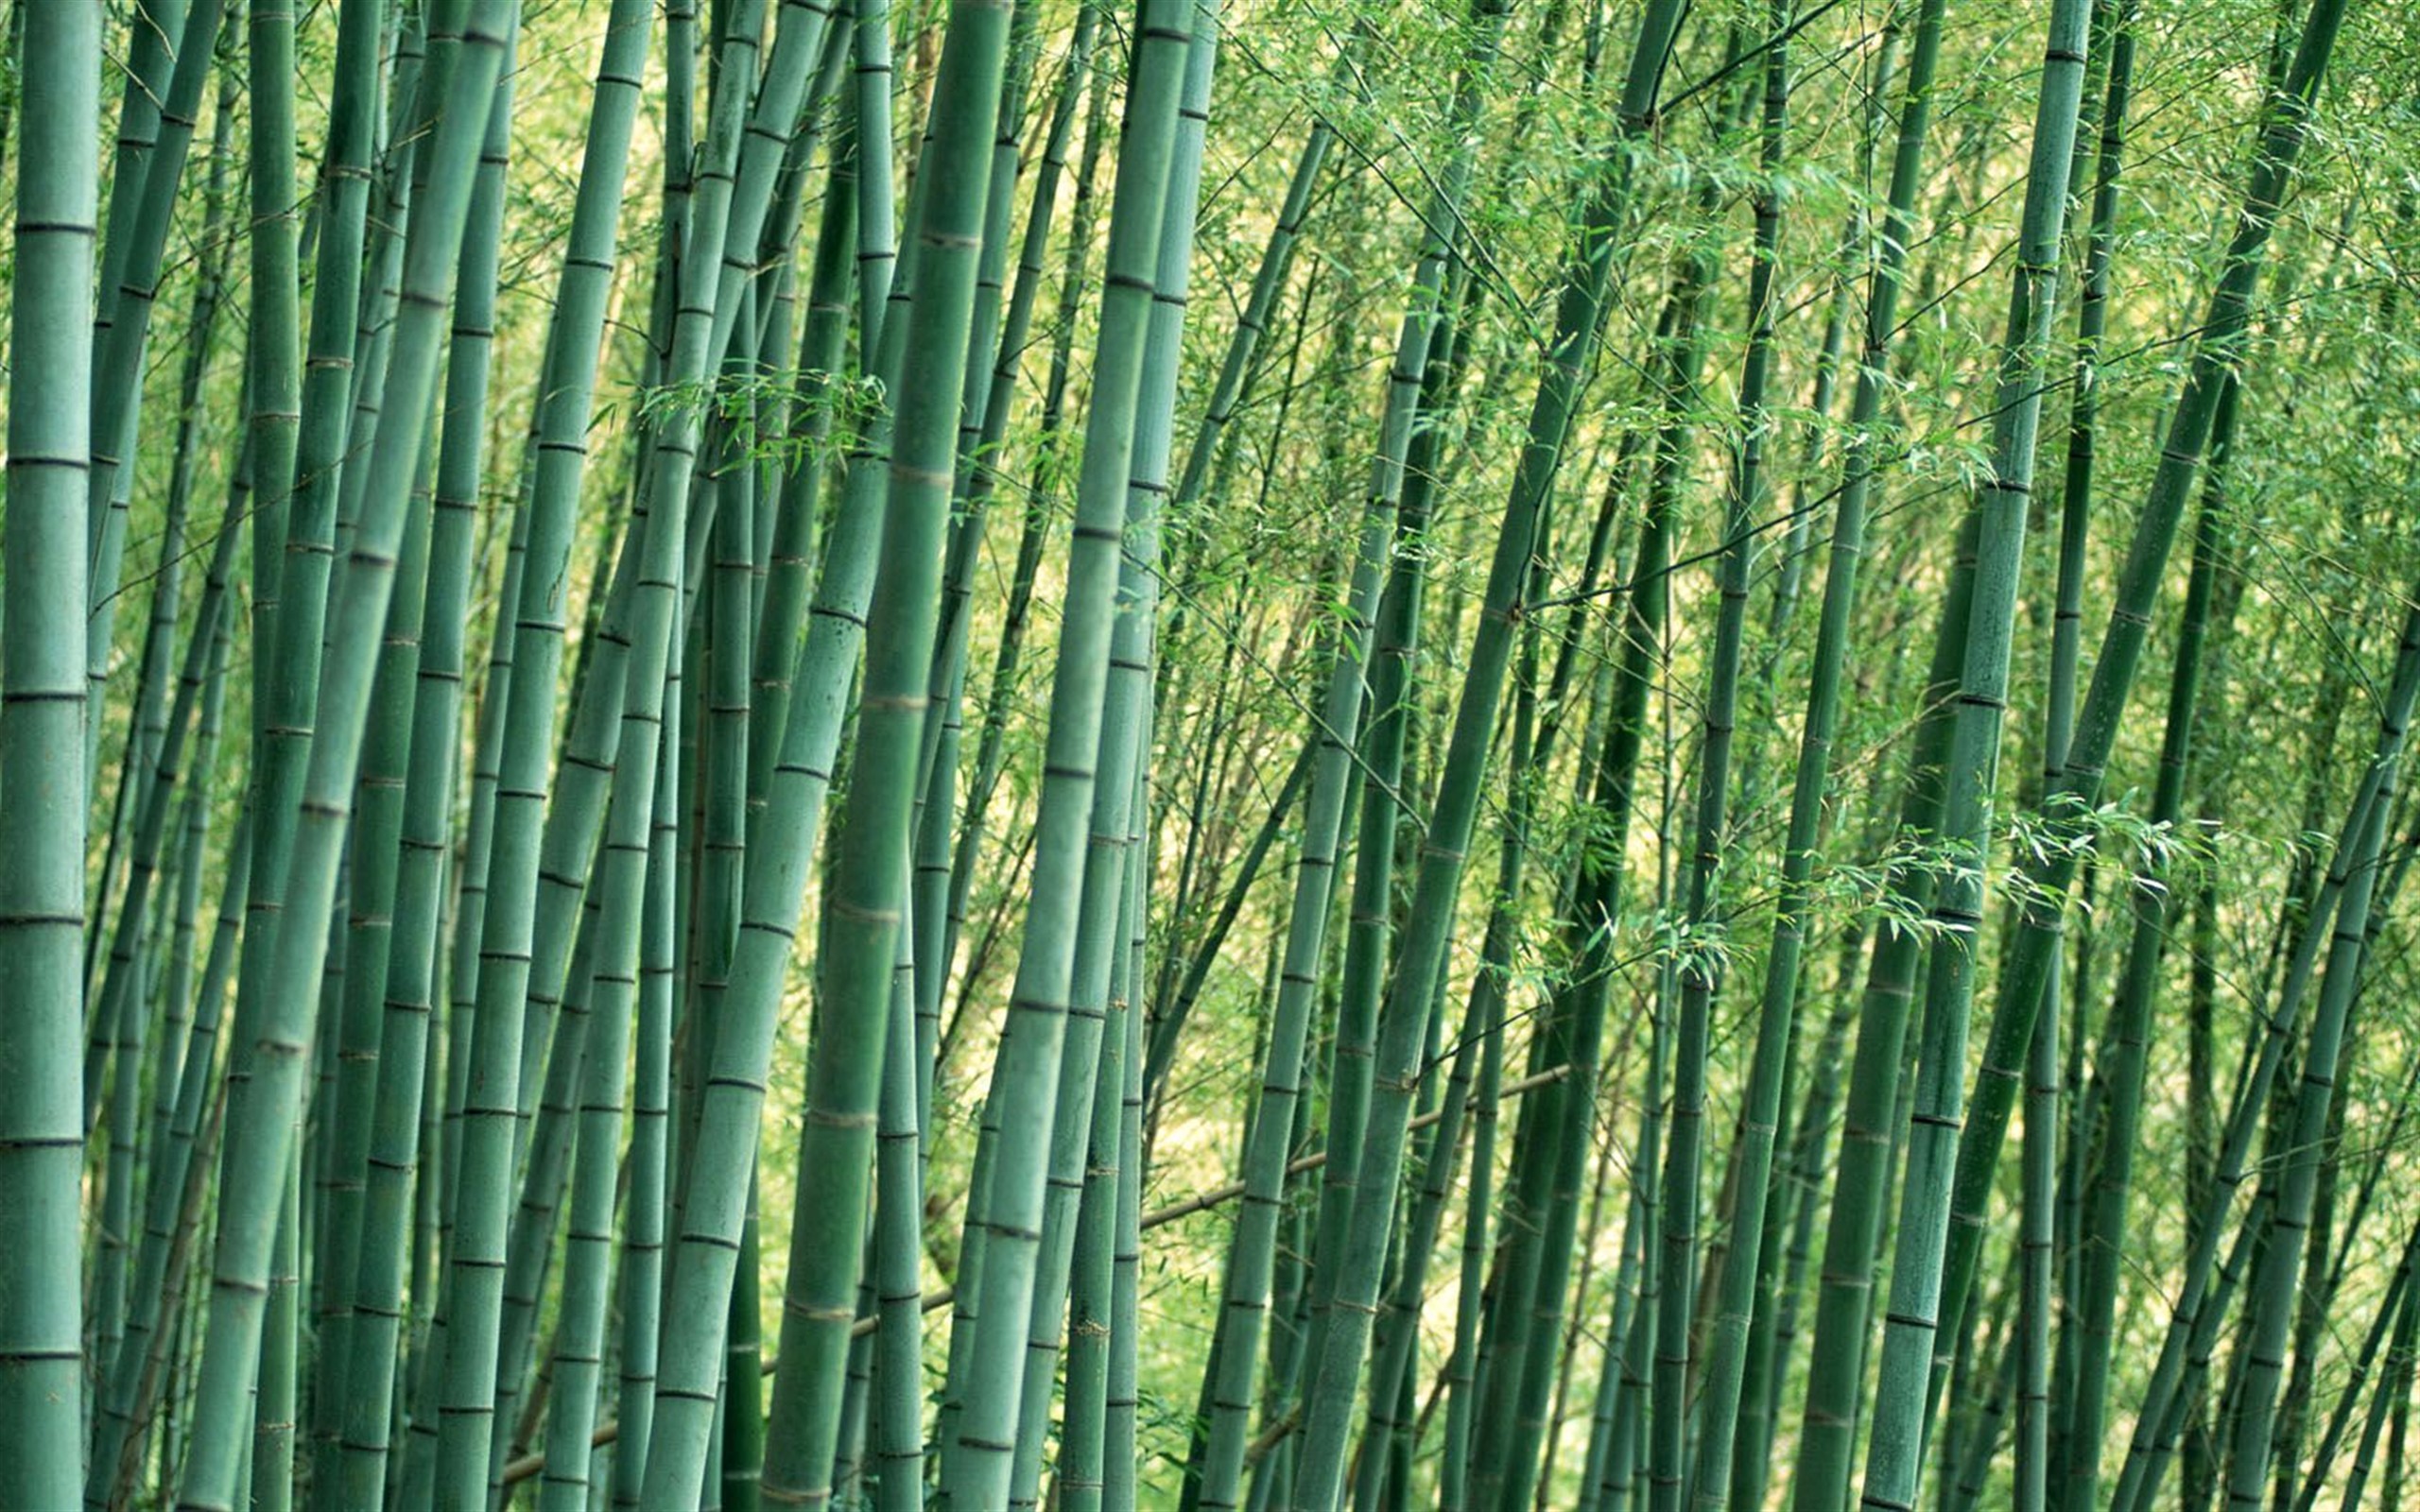 Bamboo Clothing